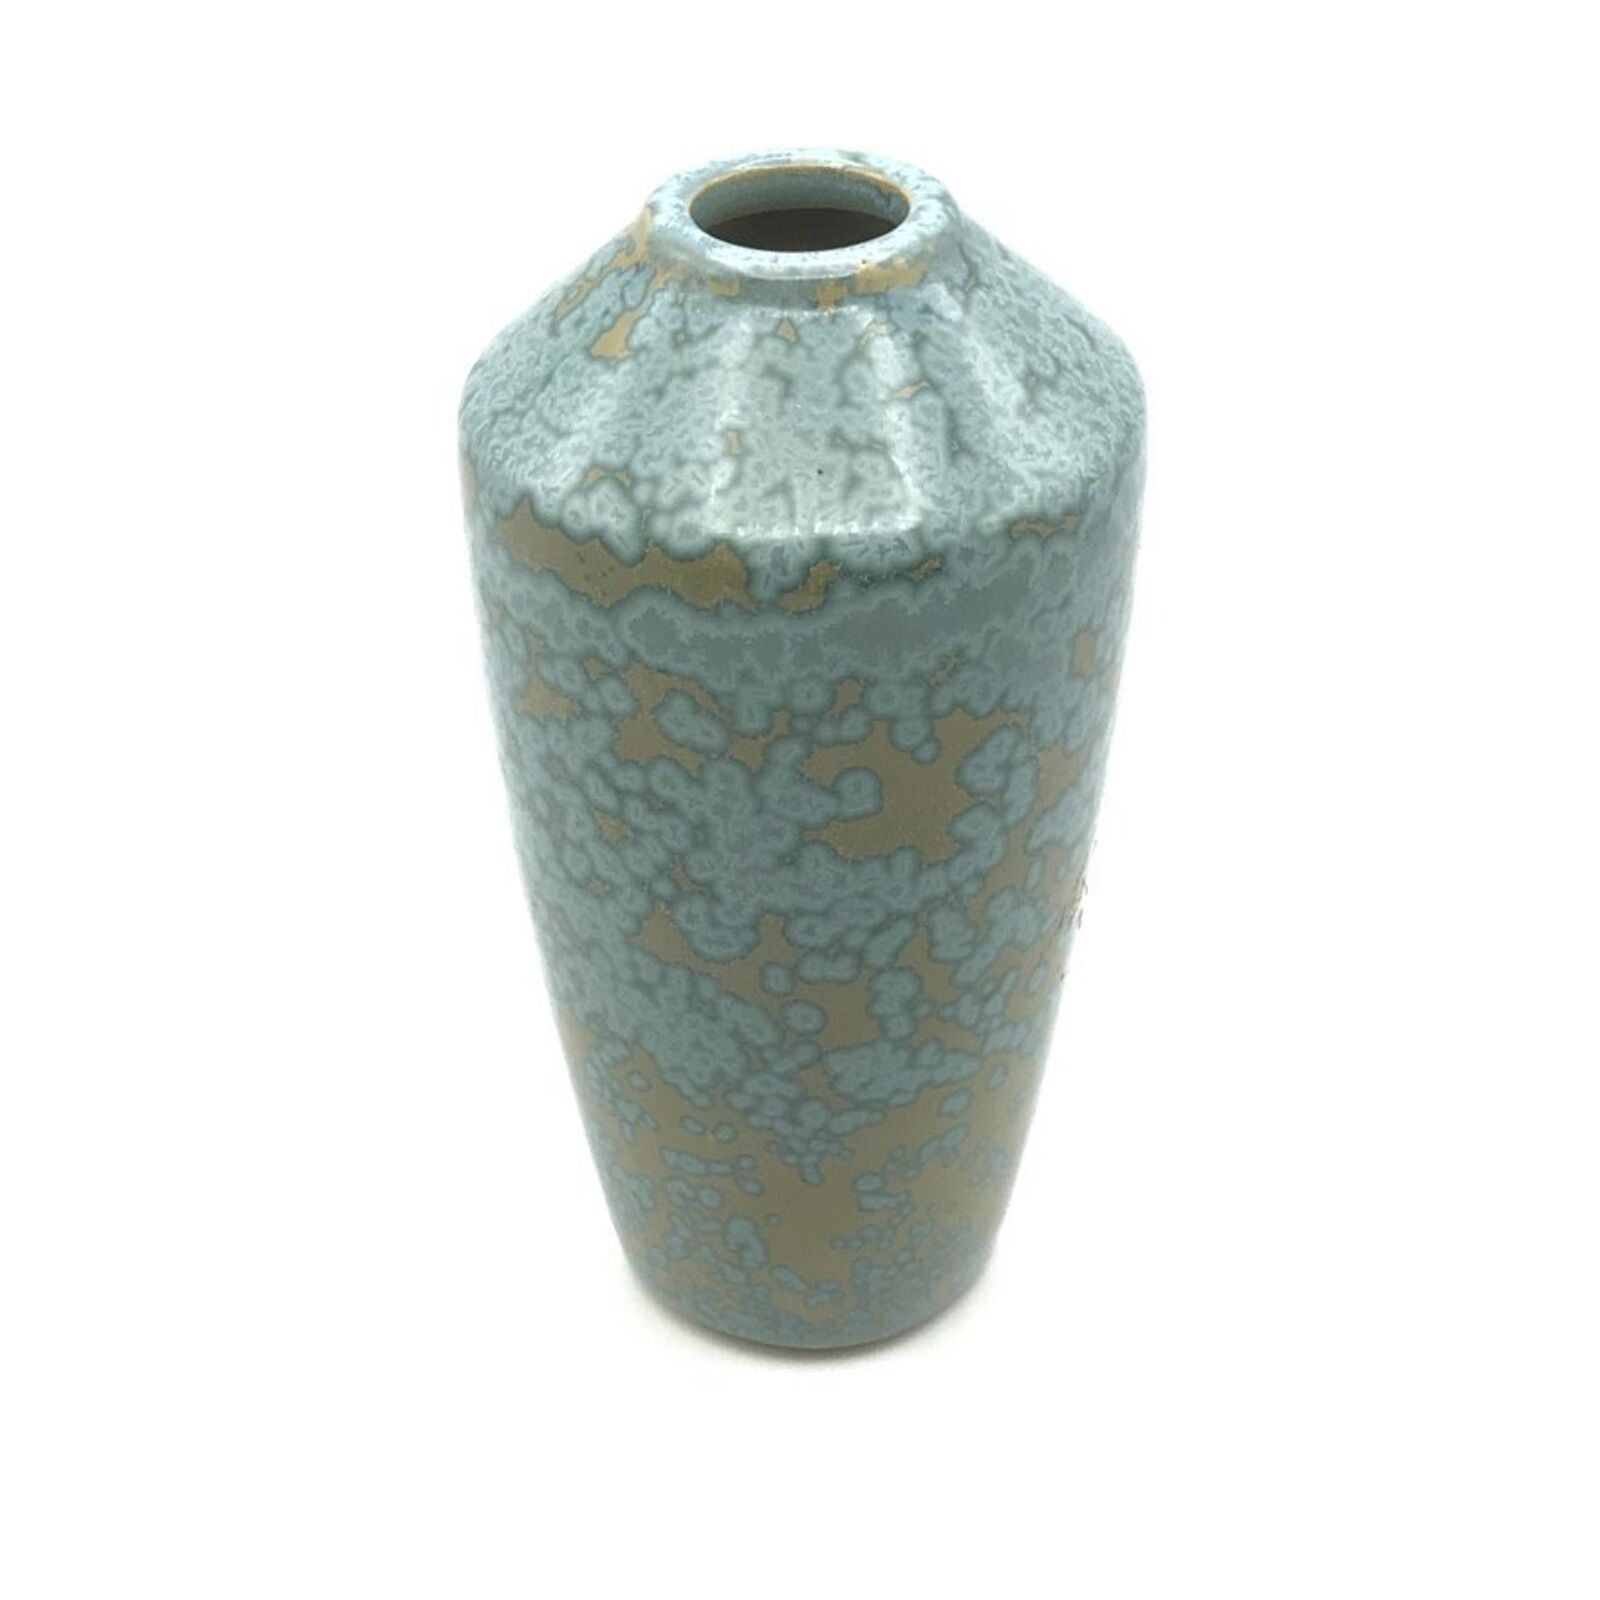 Vintage Crystalline Reactive Glaze Artisan Pottery Vase Ombre Gold to Green #2